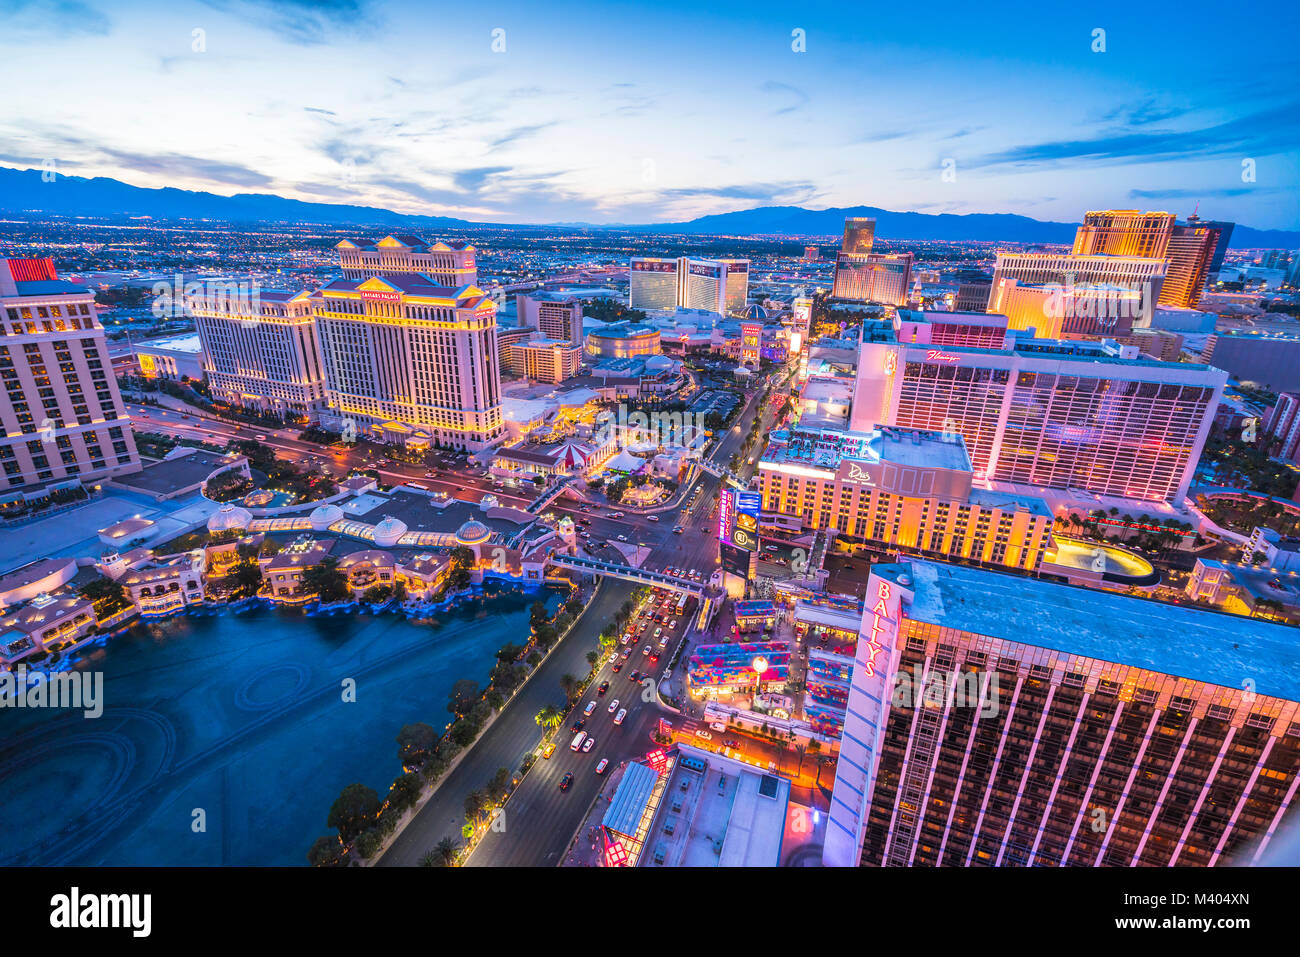 Las Vegas, Nevada, USA. 05-30-17: bella las vegas arial vista di notte. Foto Stock